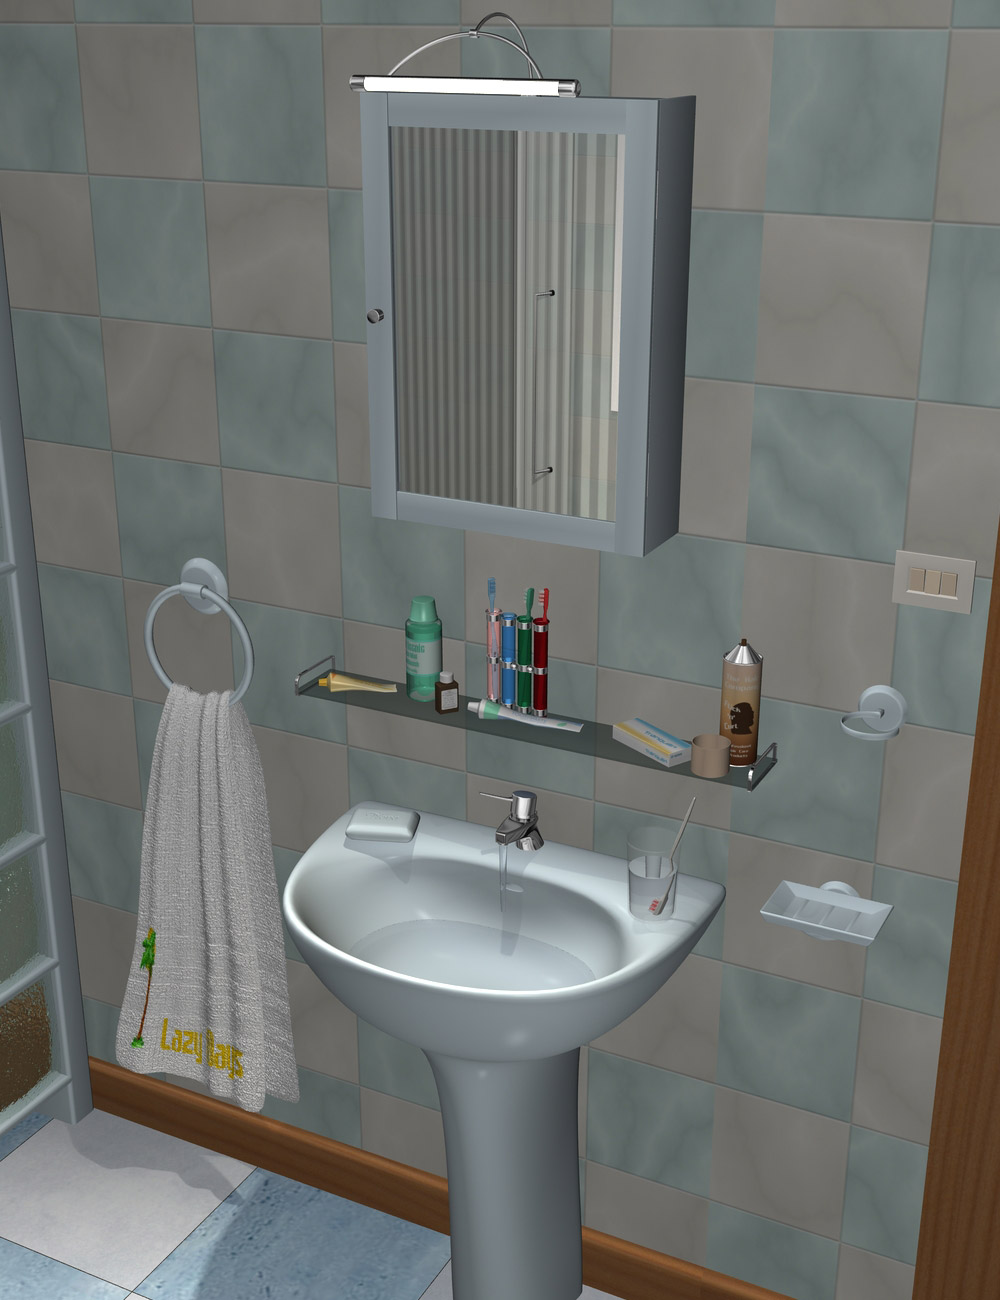 Home One Bathroom by: maclean, 3D Models by Daz 3D